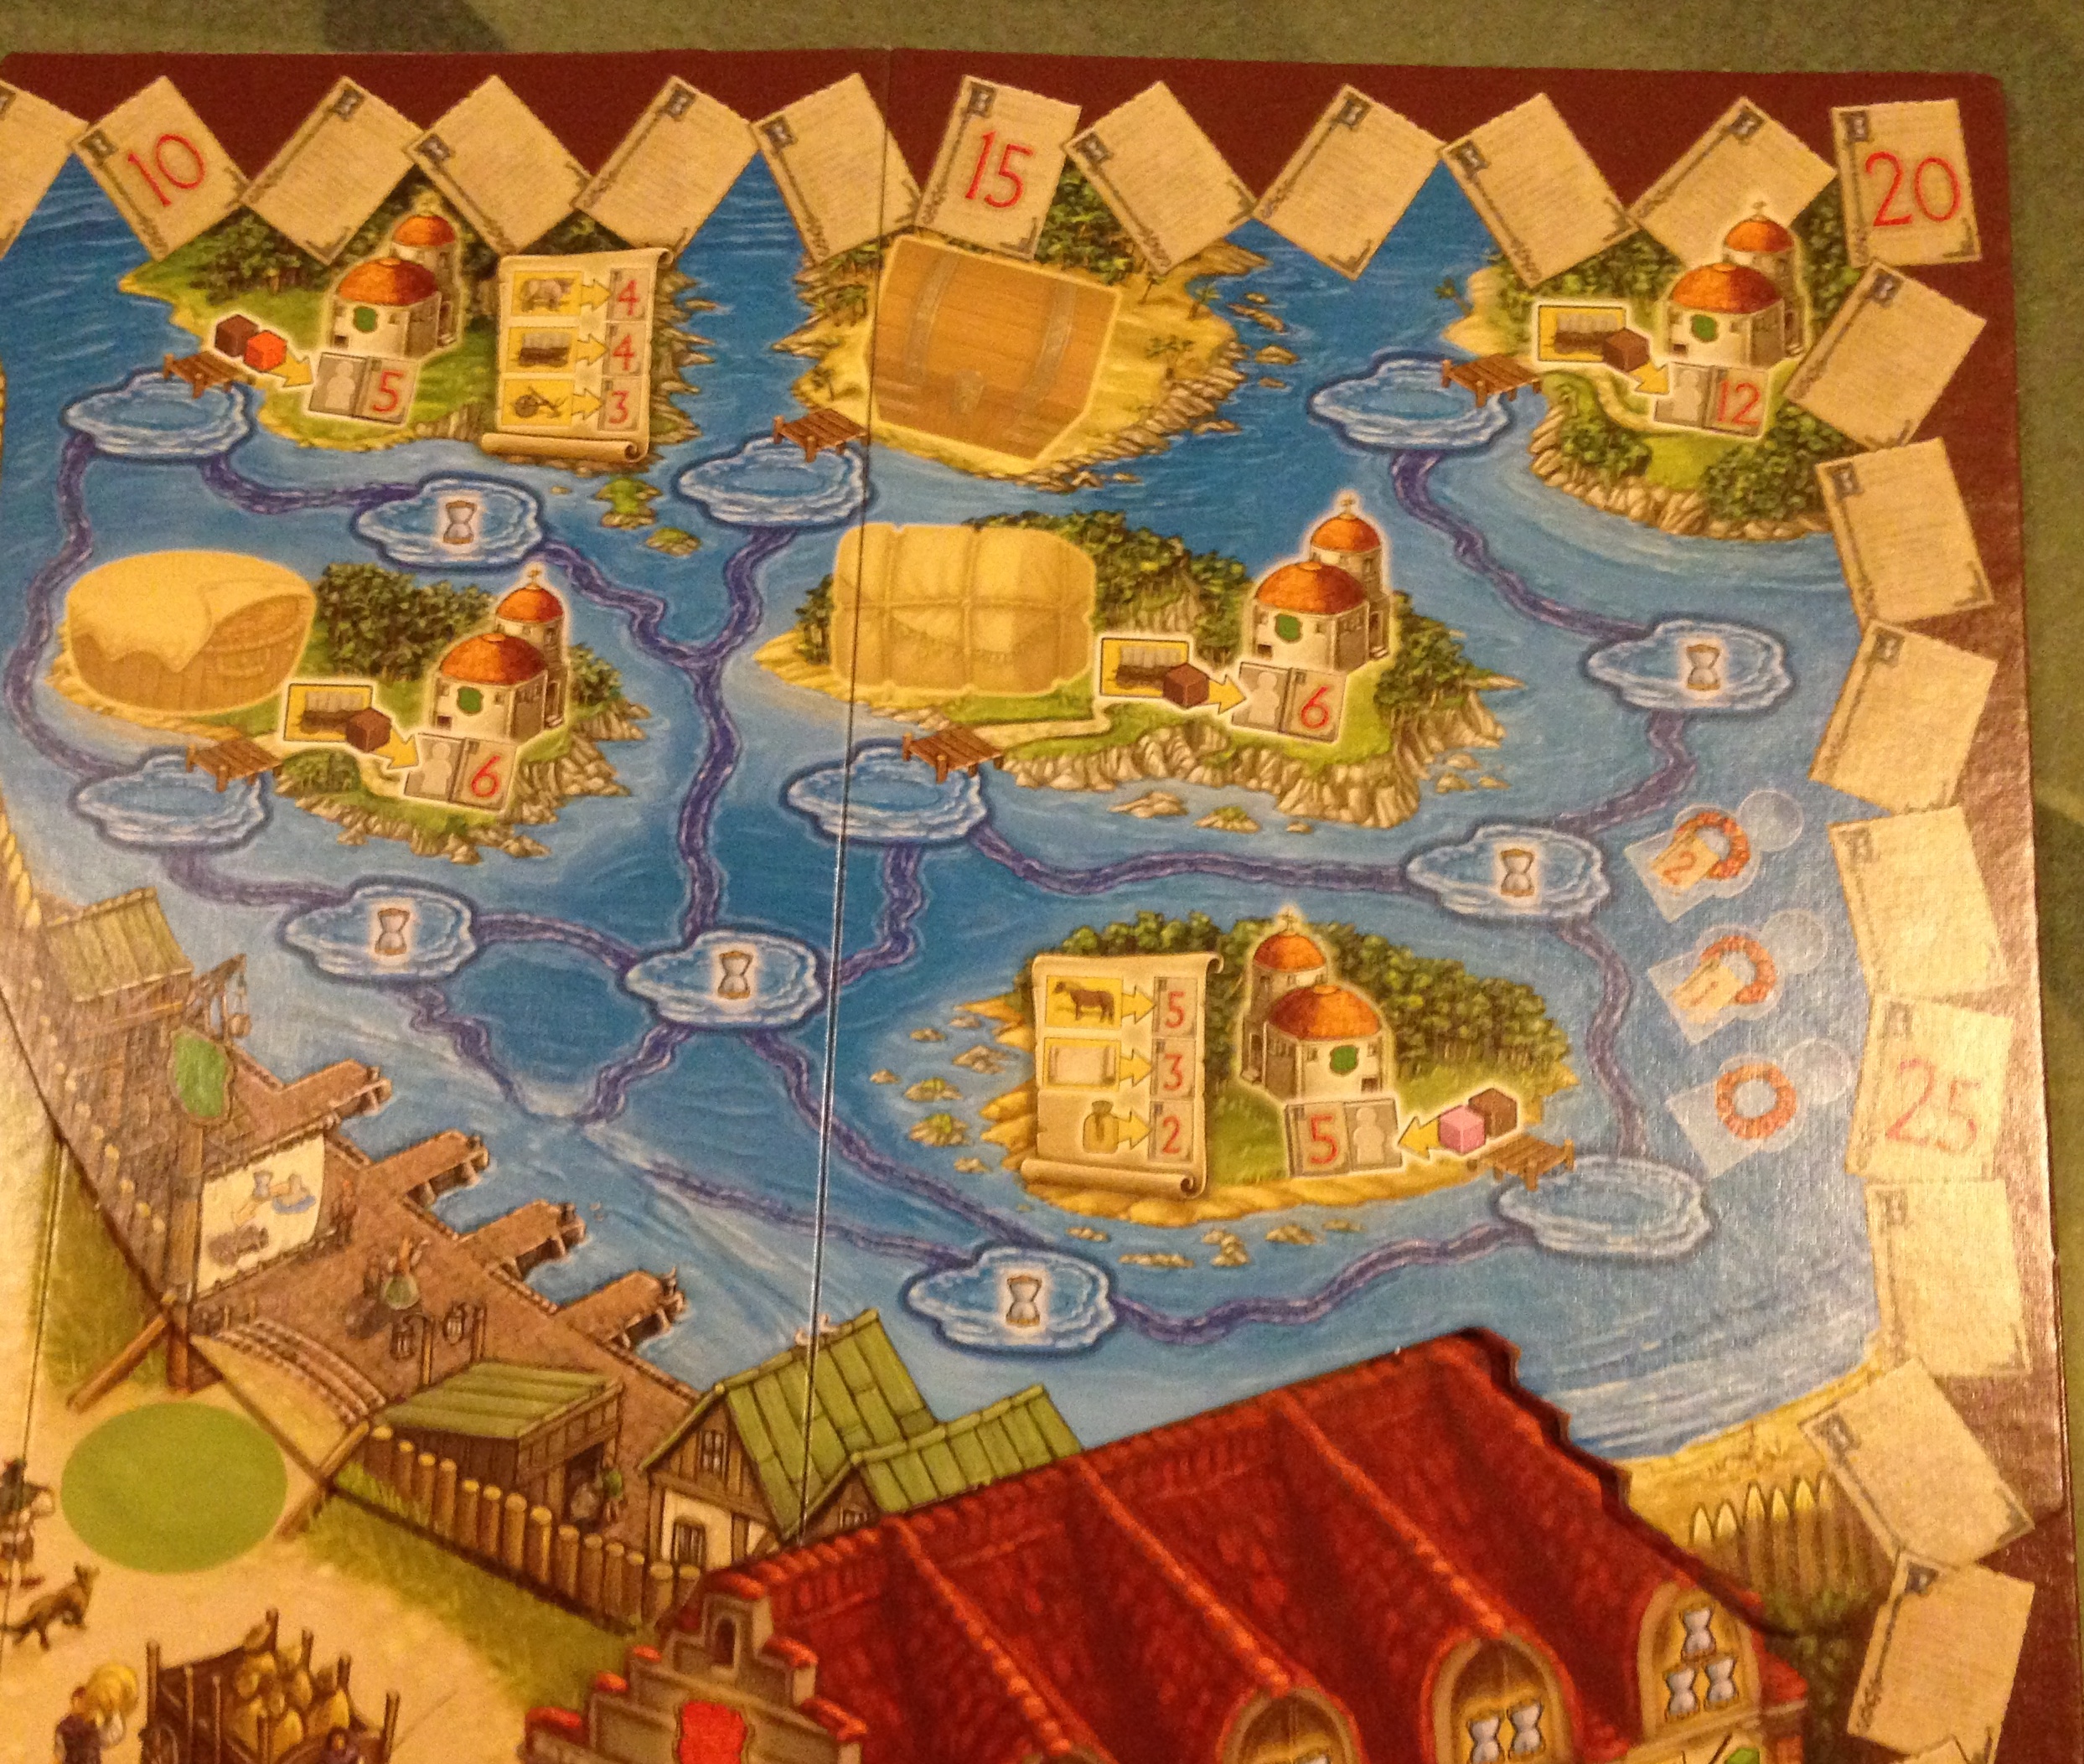 Village Port board game 